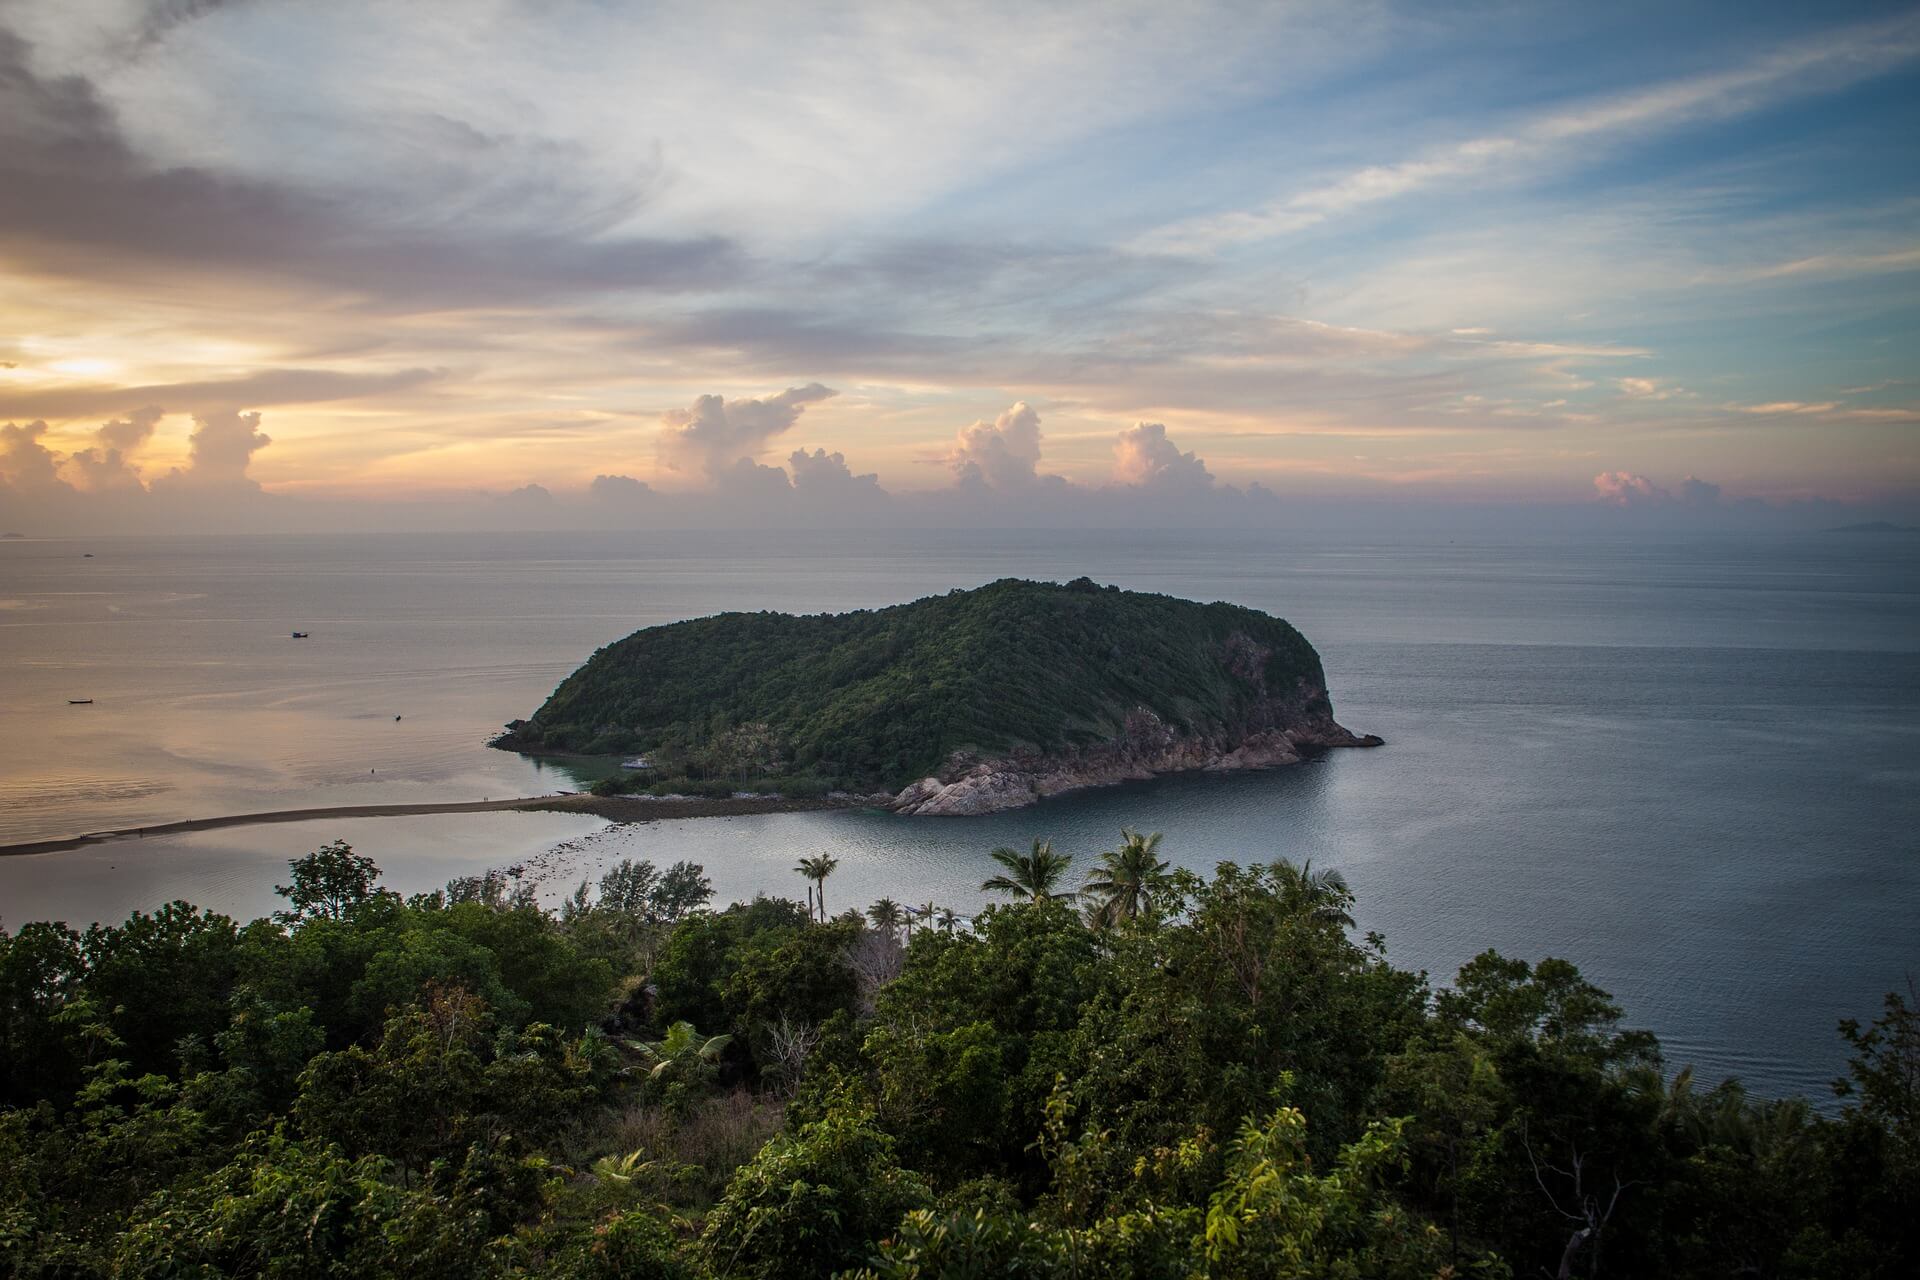 Таиланд остров ко панган